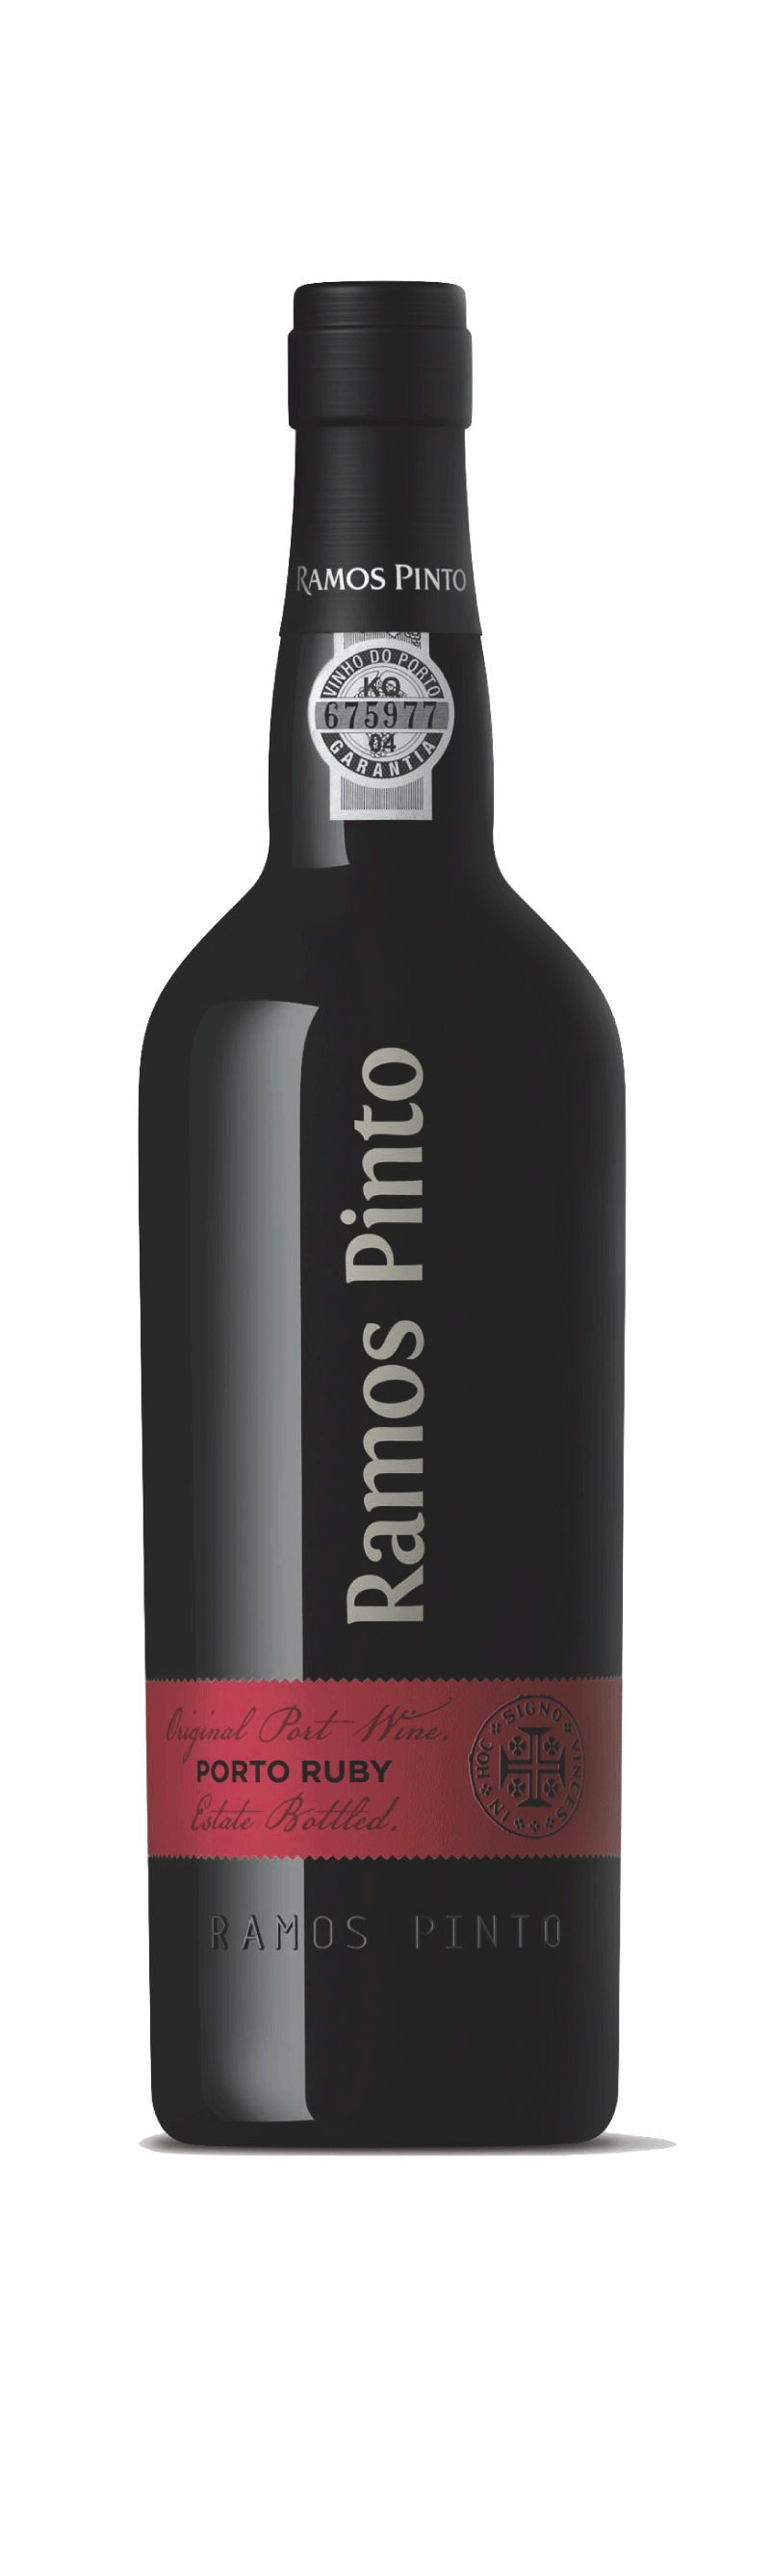 Ramos Pinto Ruby Porto